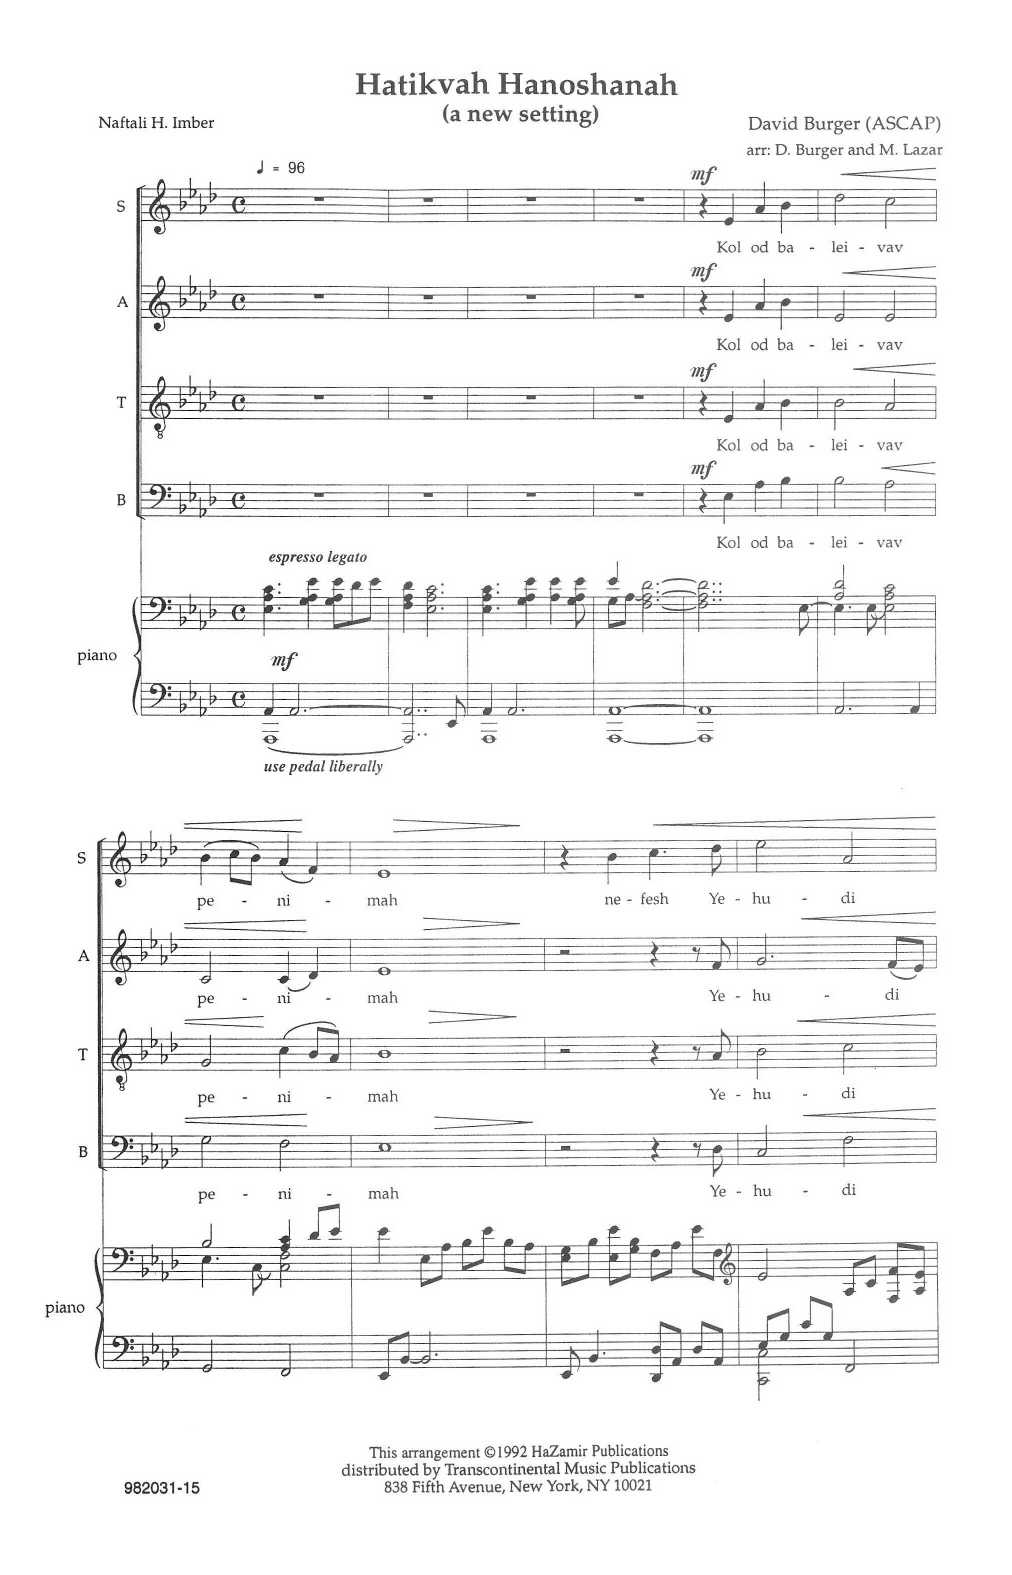 Download David Burger Hatikvah Hanoshanah Sheet Music and learn how to play SATB Choir PDF digital score in minutes